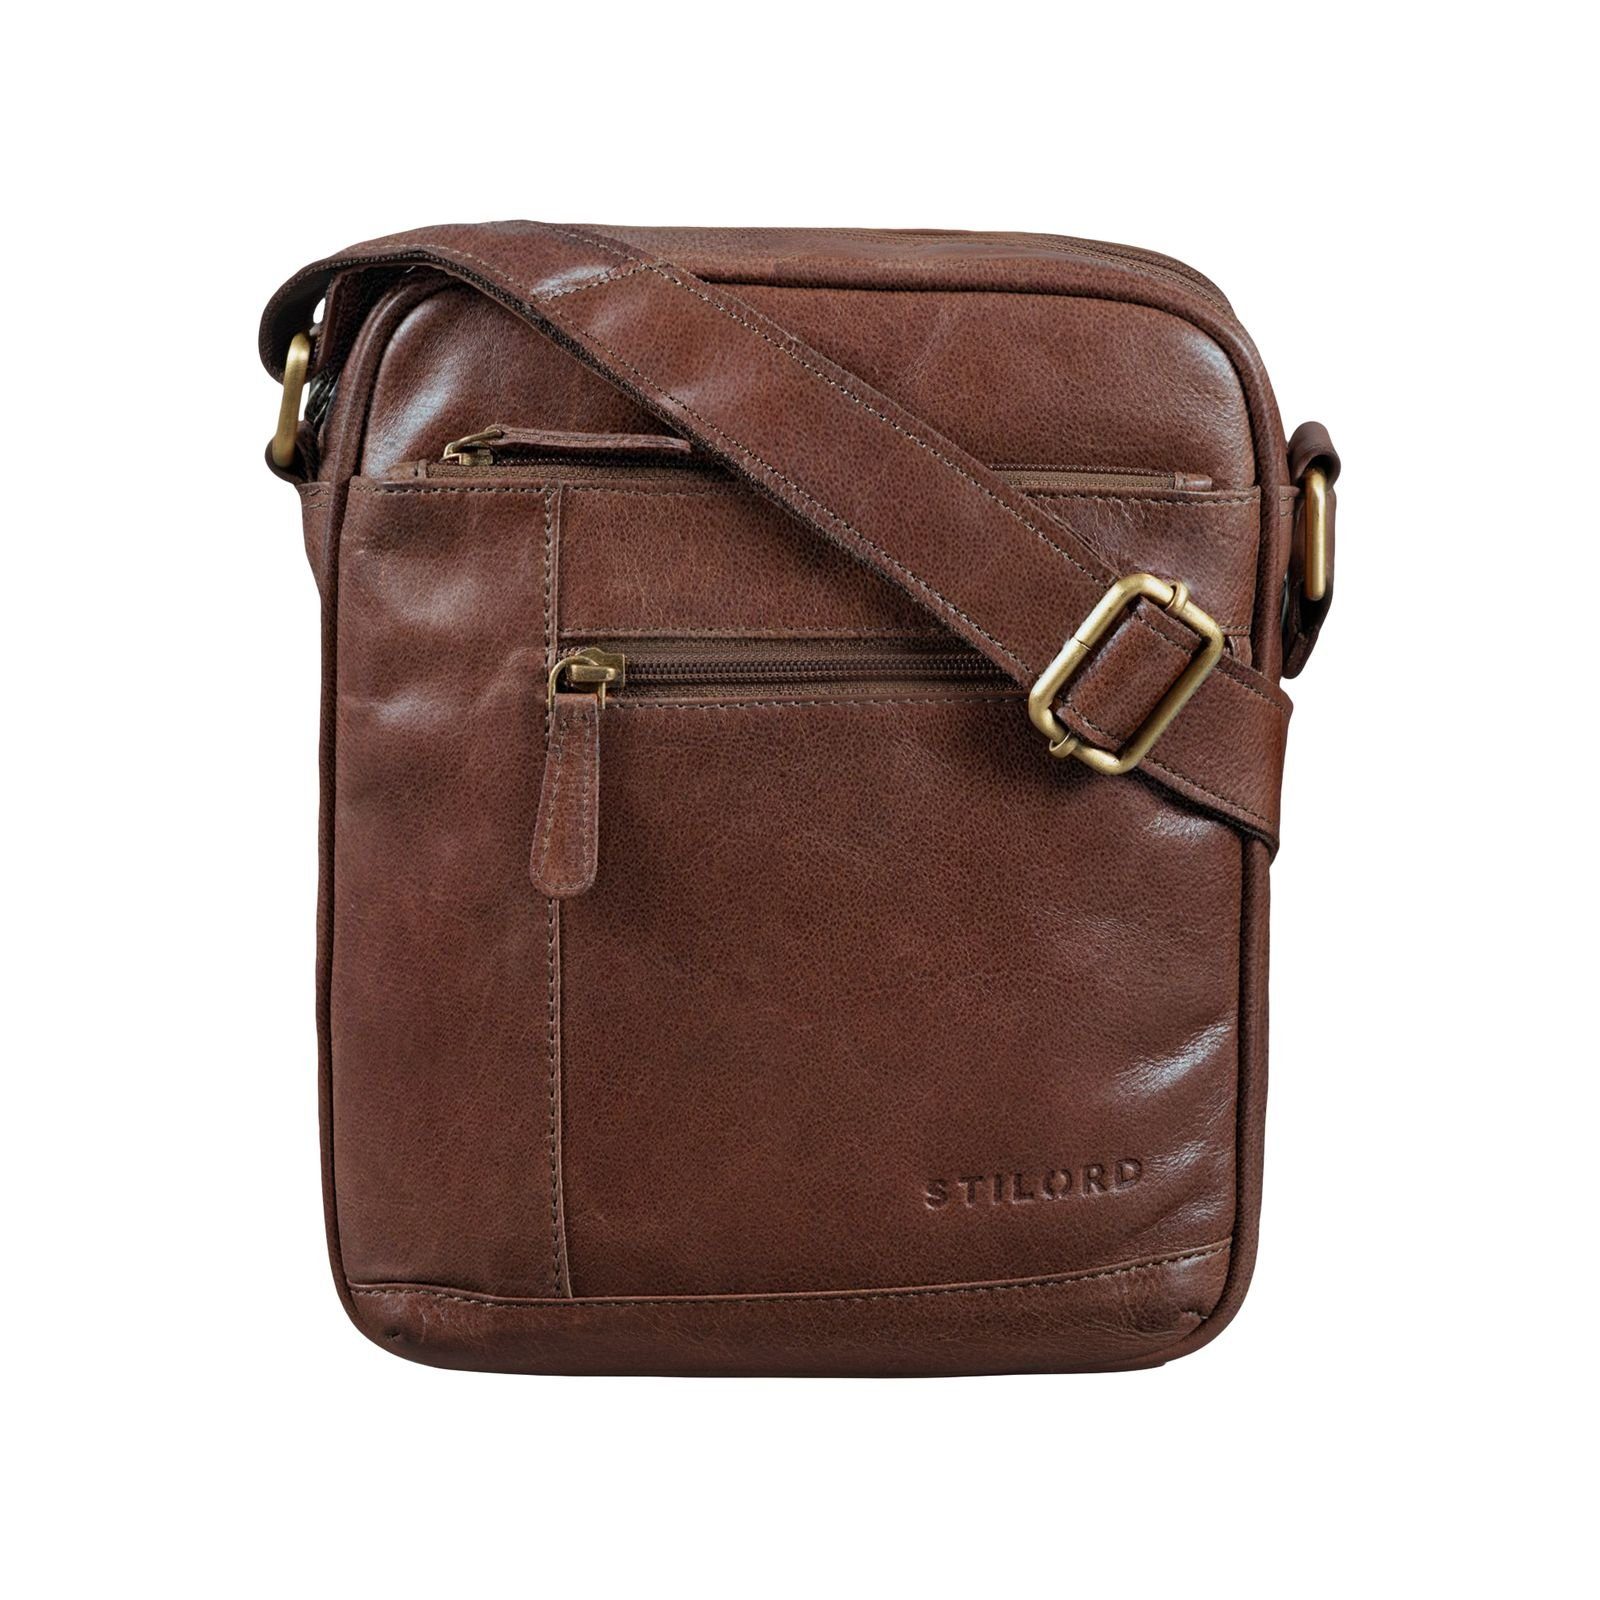 STILORD Messenger Bag "Diego" Vintage Herrentasche Leder klein maraska - dunkelbraun